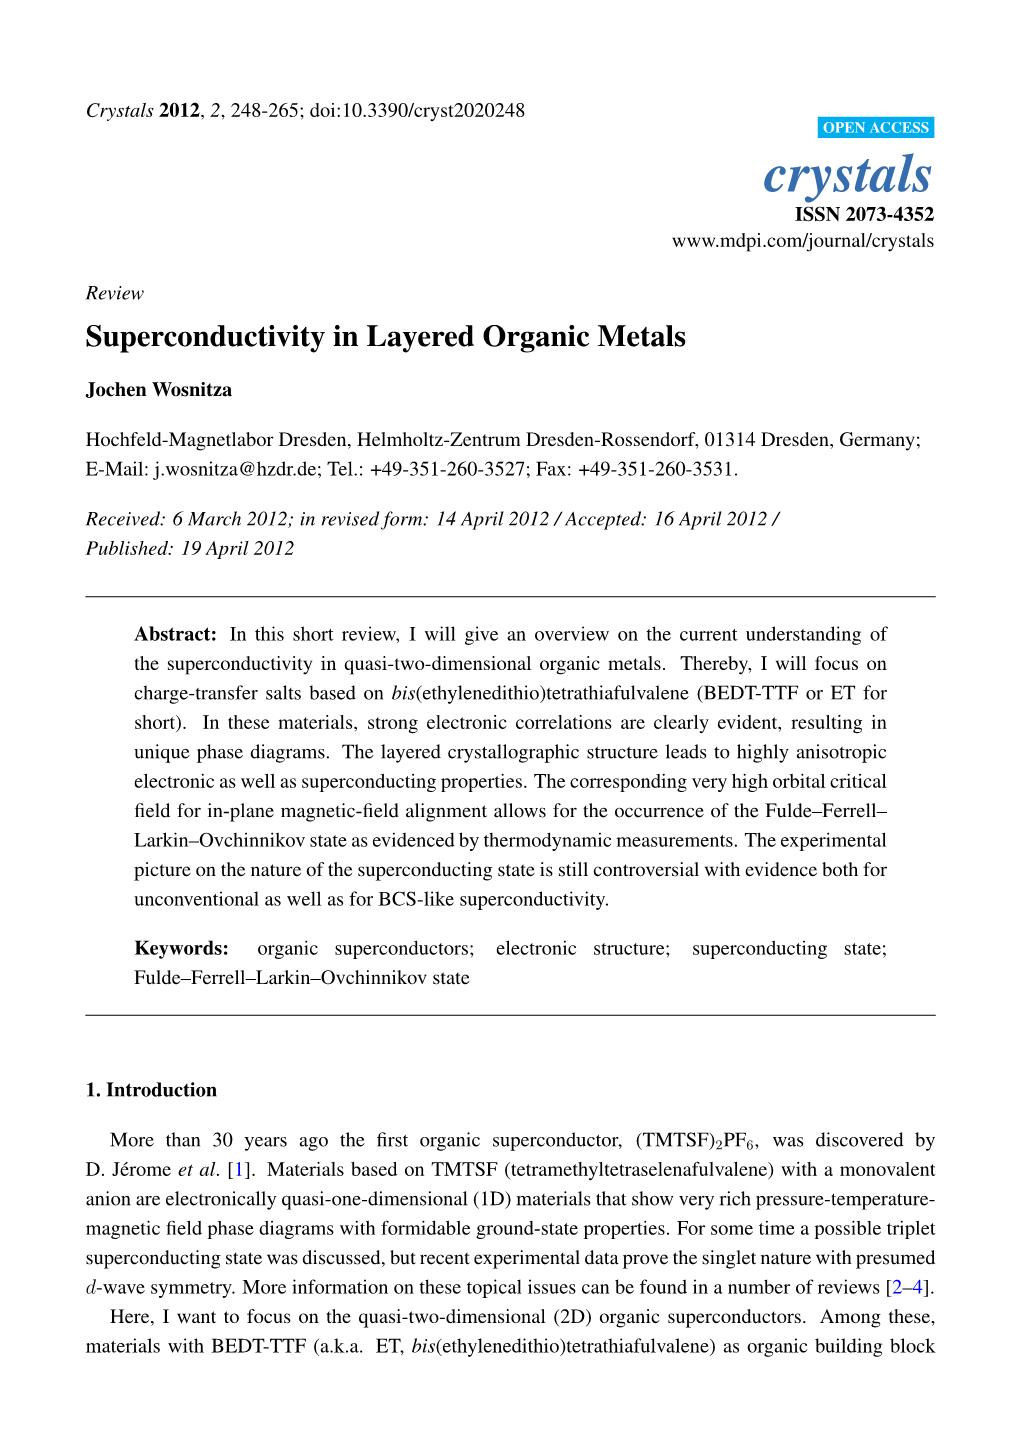 Superconductivity in Layered Organic Metals